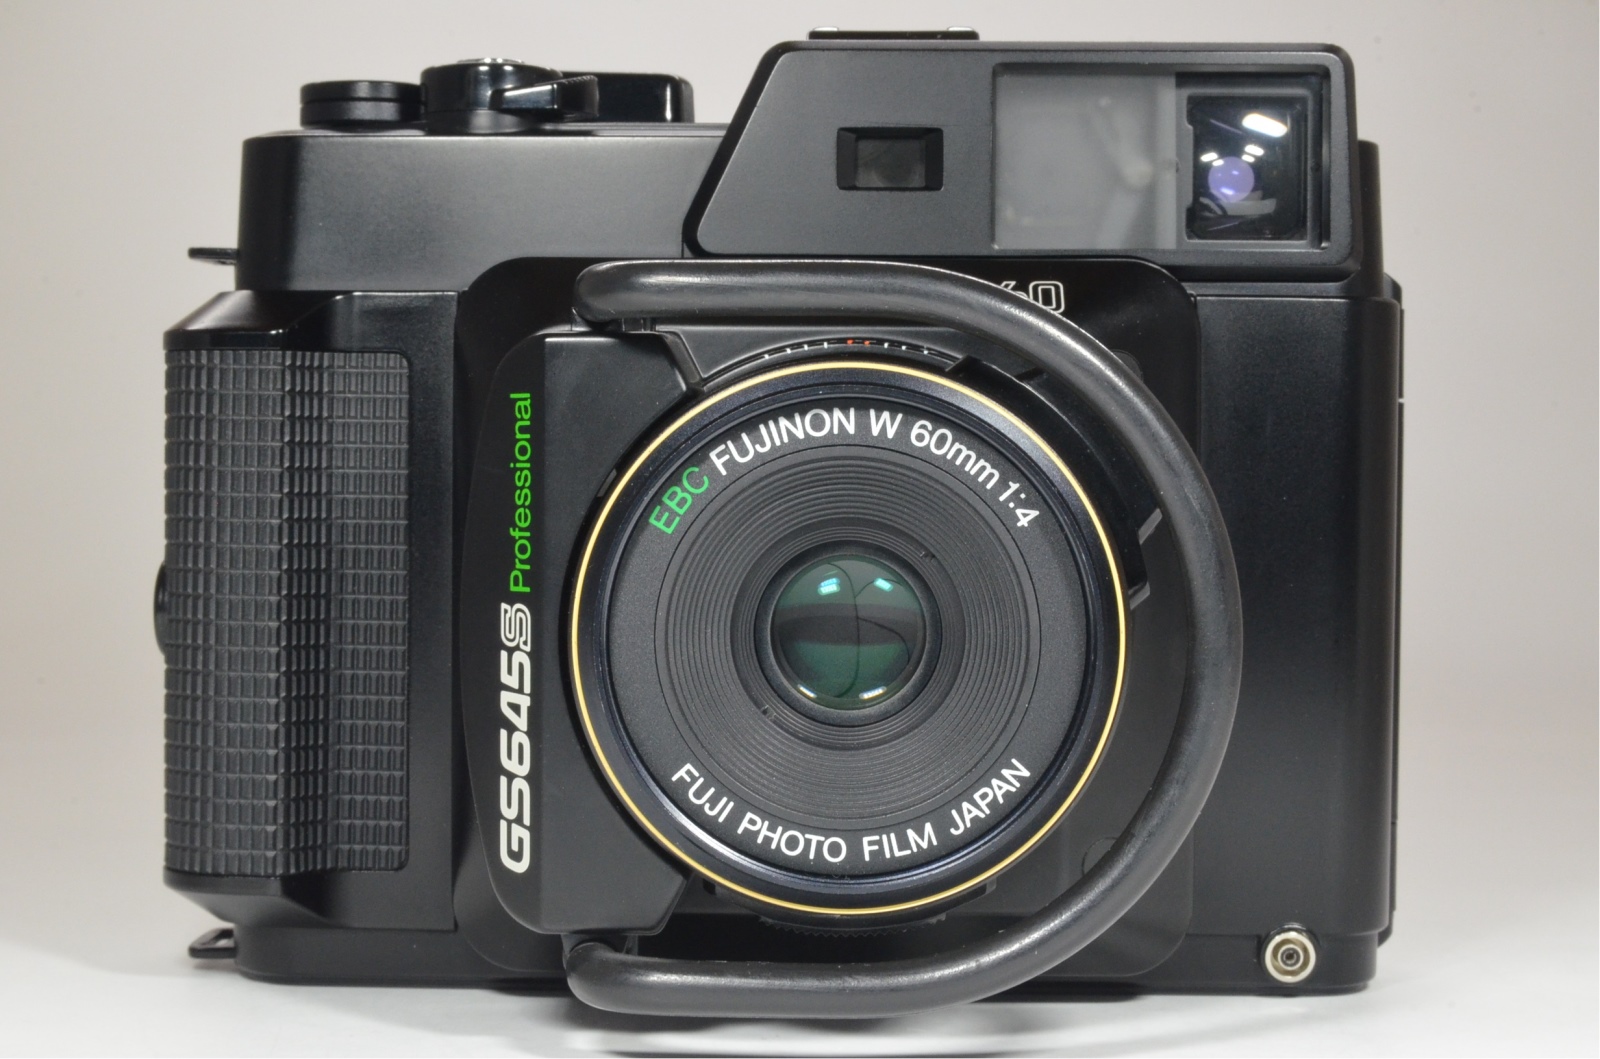 Fuji Fujifilm GS645S Fujinon W 60mm f4 camera from Japan Shooting